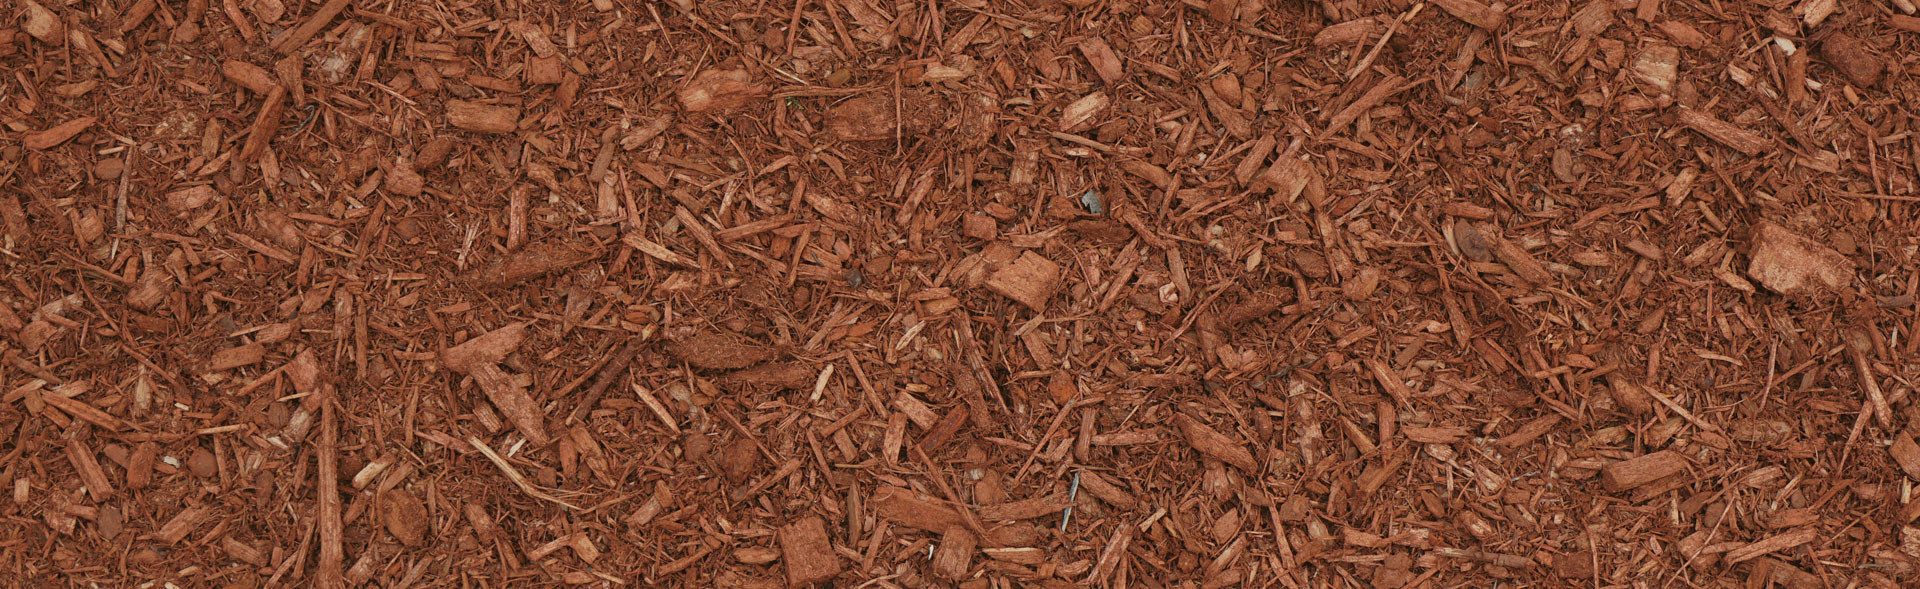 Soil - Mulch